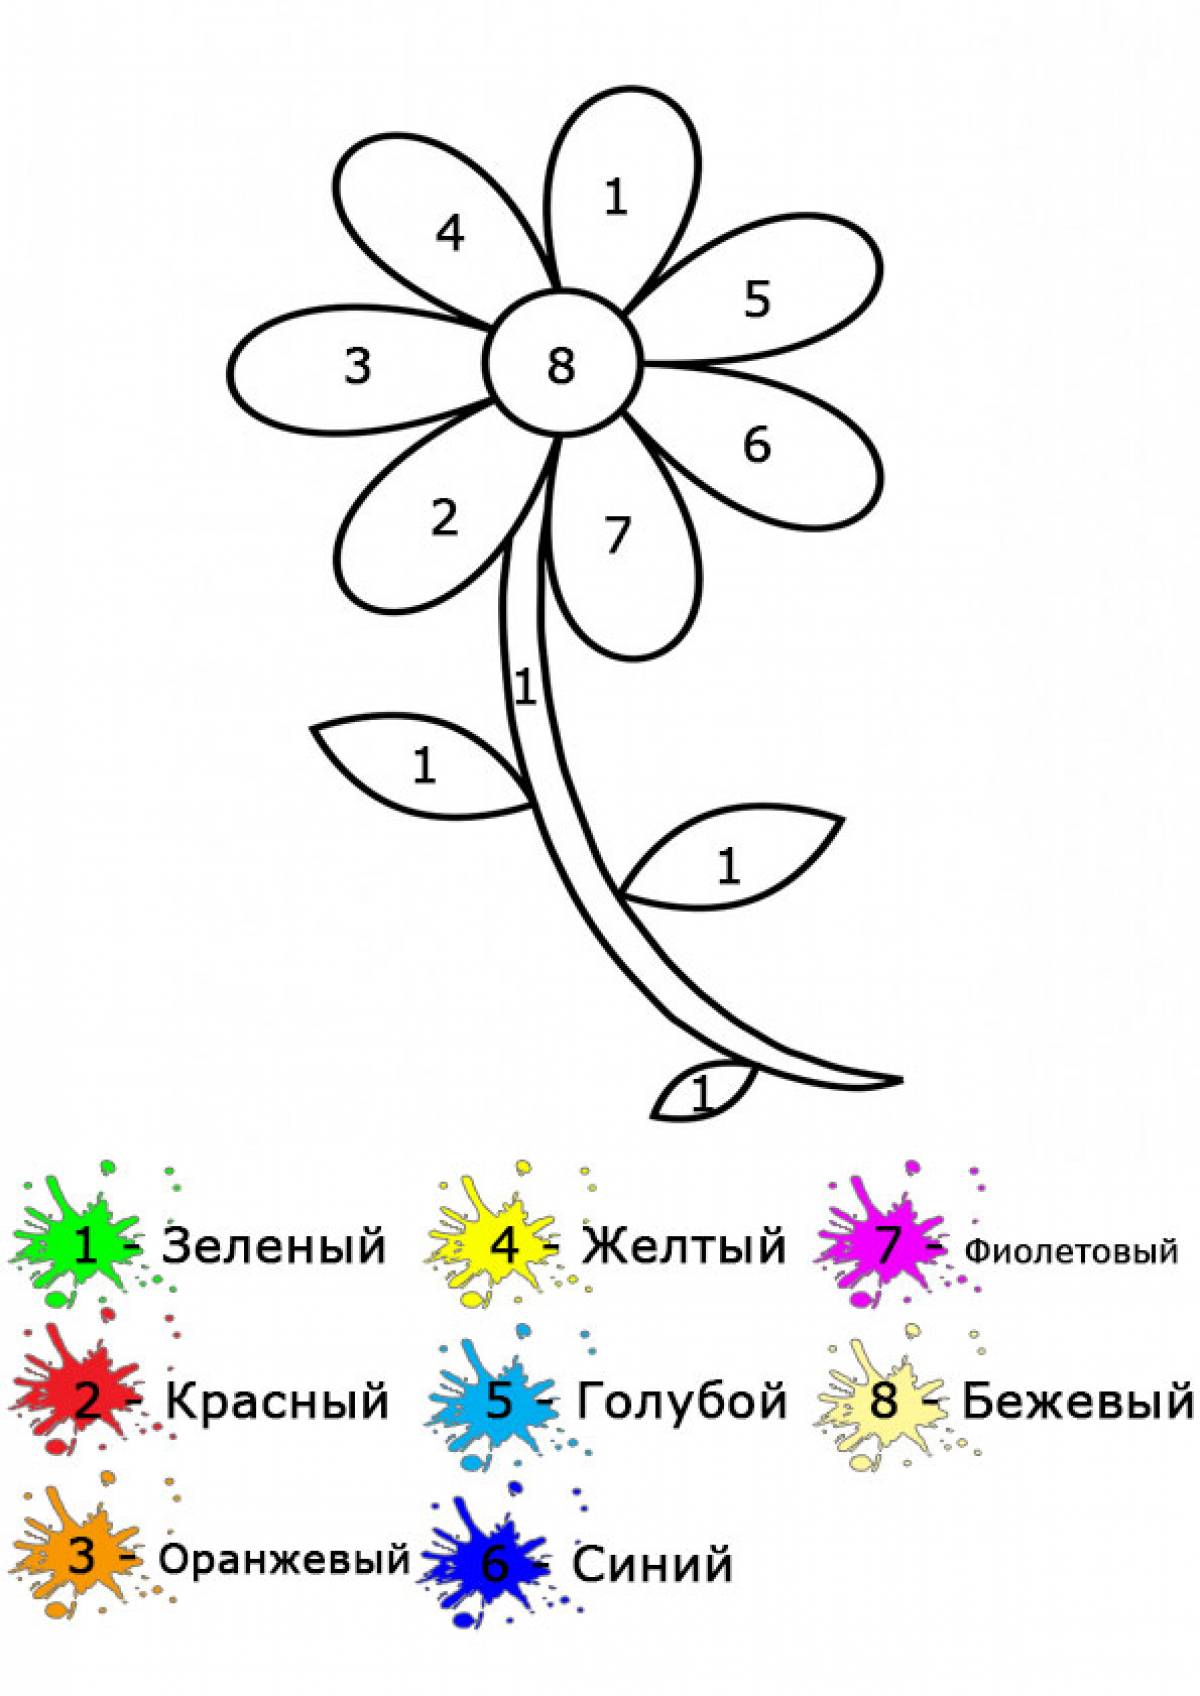 Color the seven-flower flower